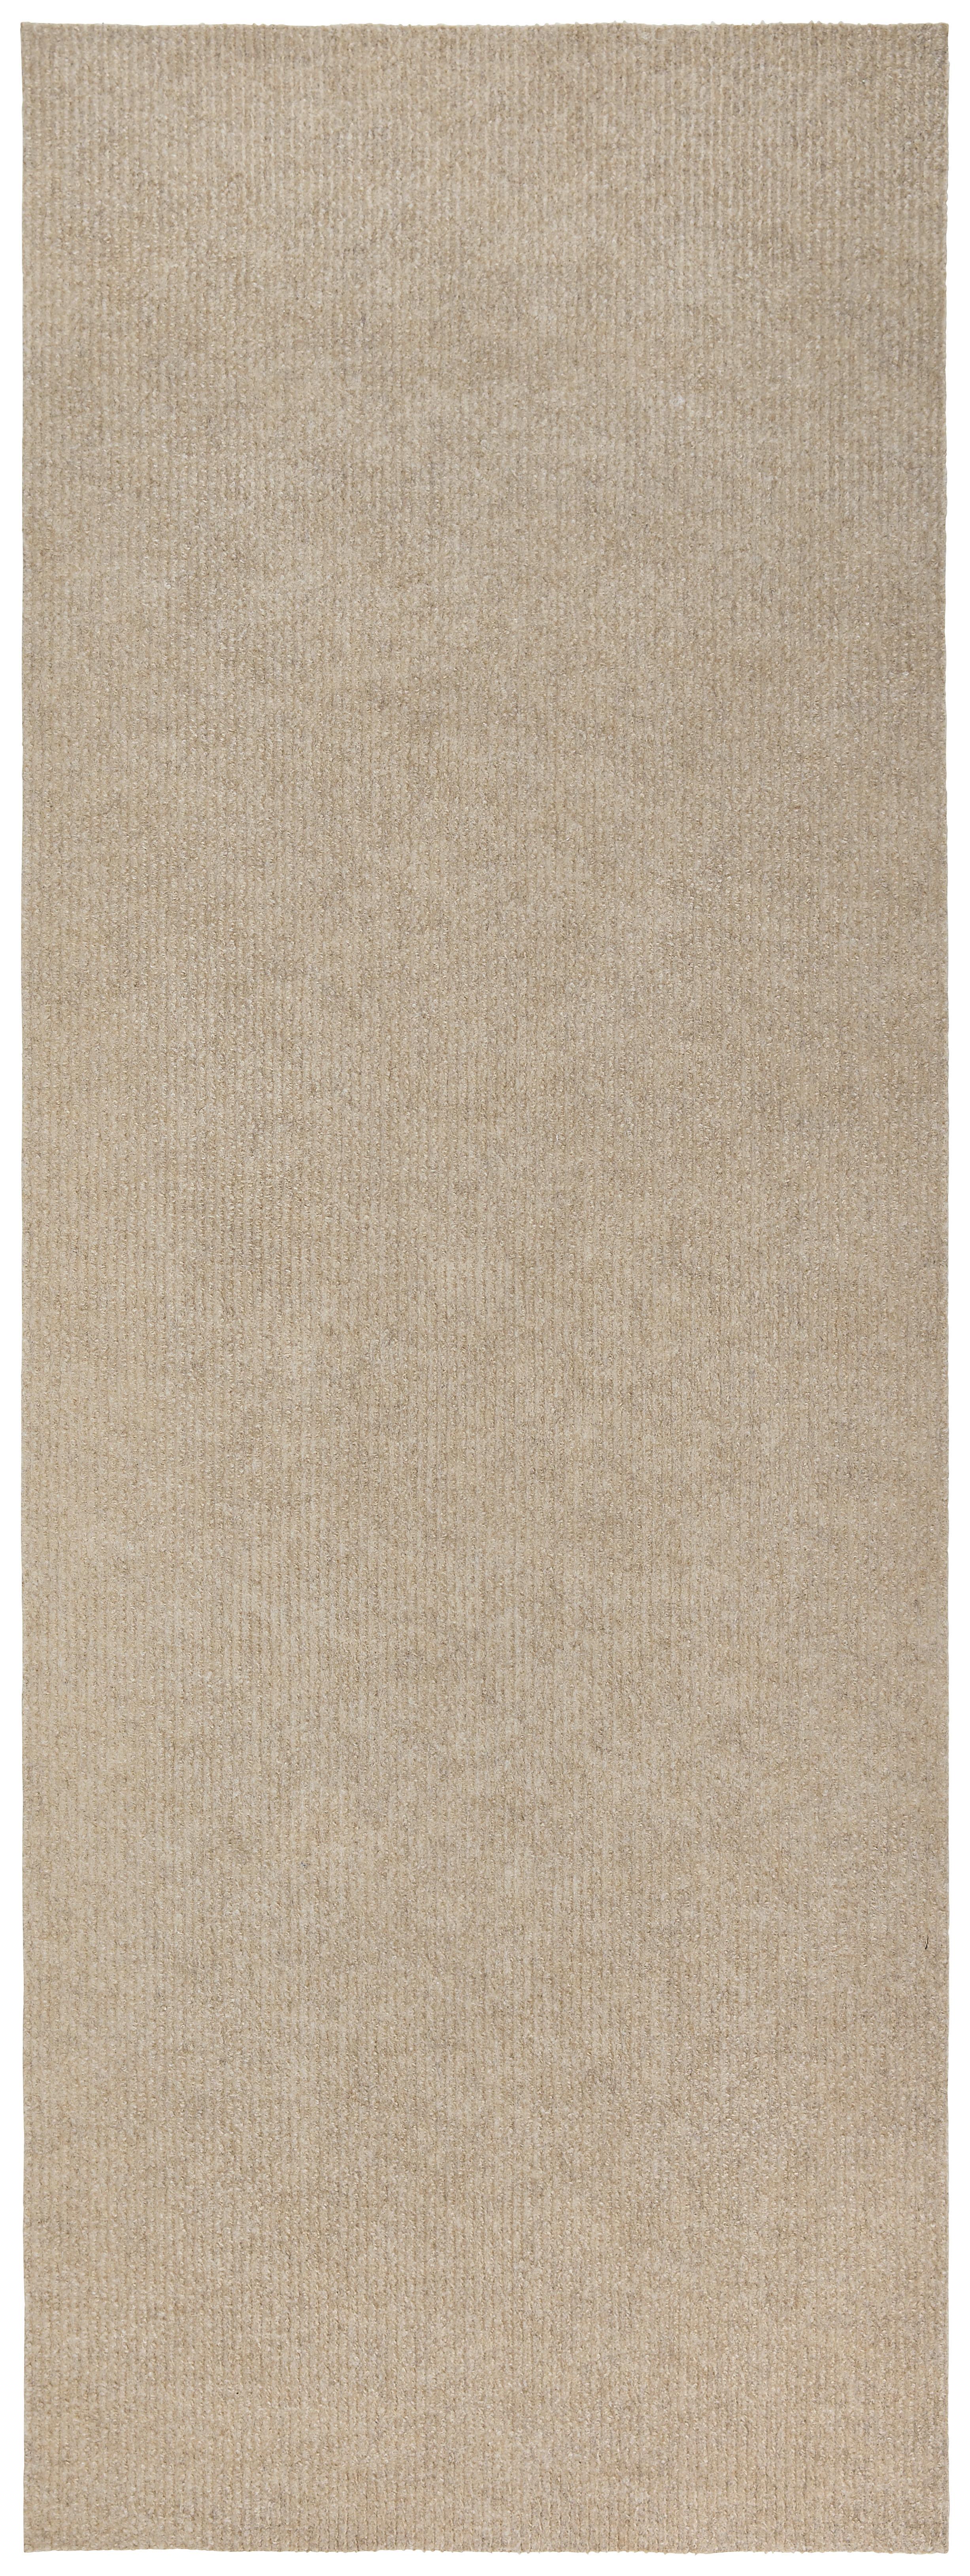 Tekač Niki - bež, Konvencionalno, tekstil (66/180cm) - Modern Living